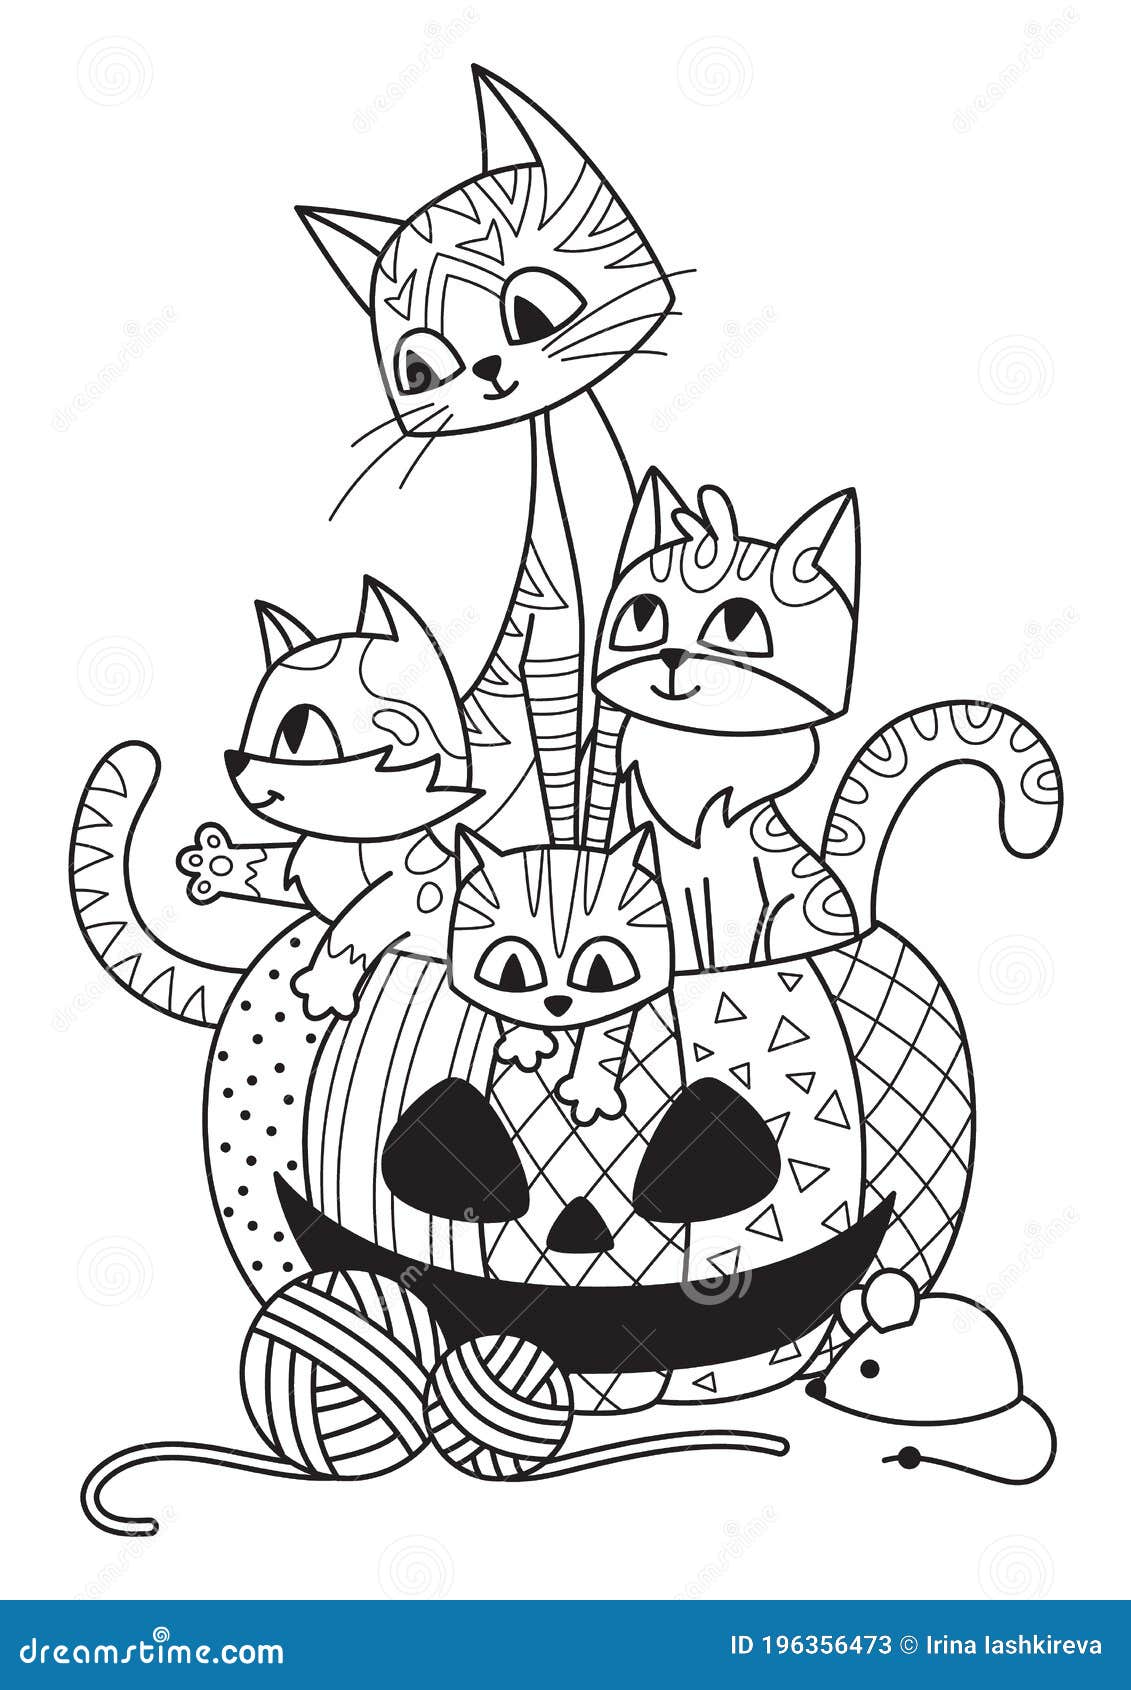 Gato e abóbora de colorir de Halloween imprimível gratuitamente